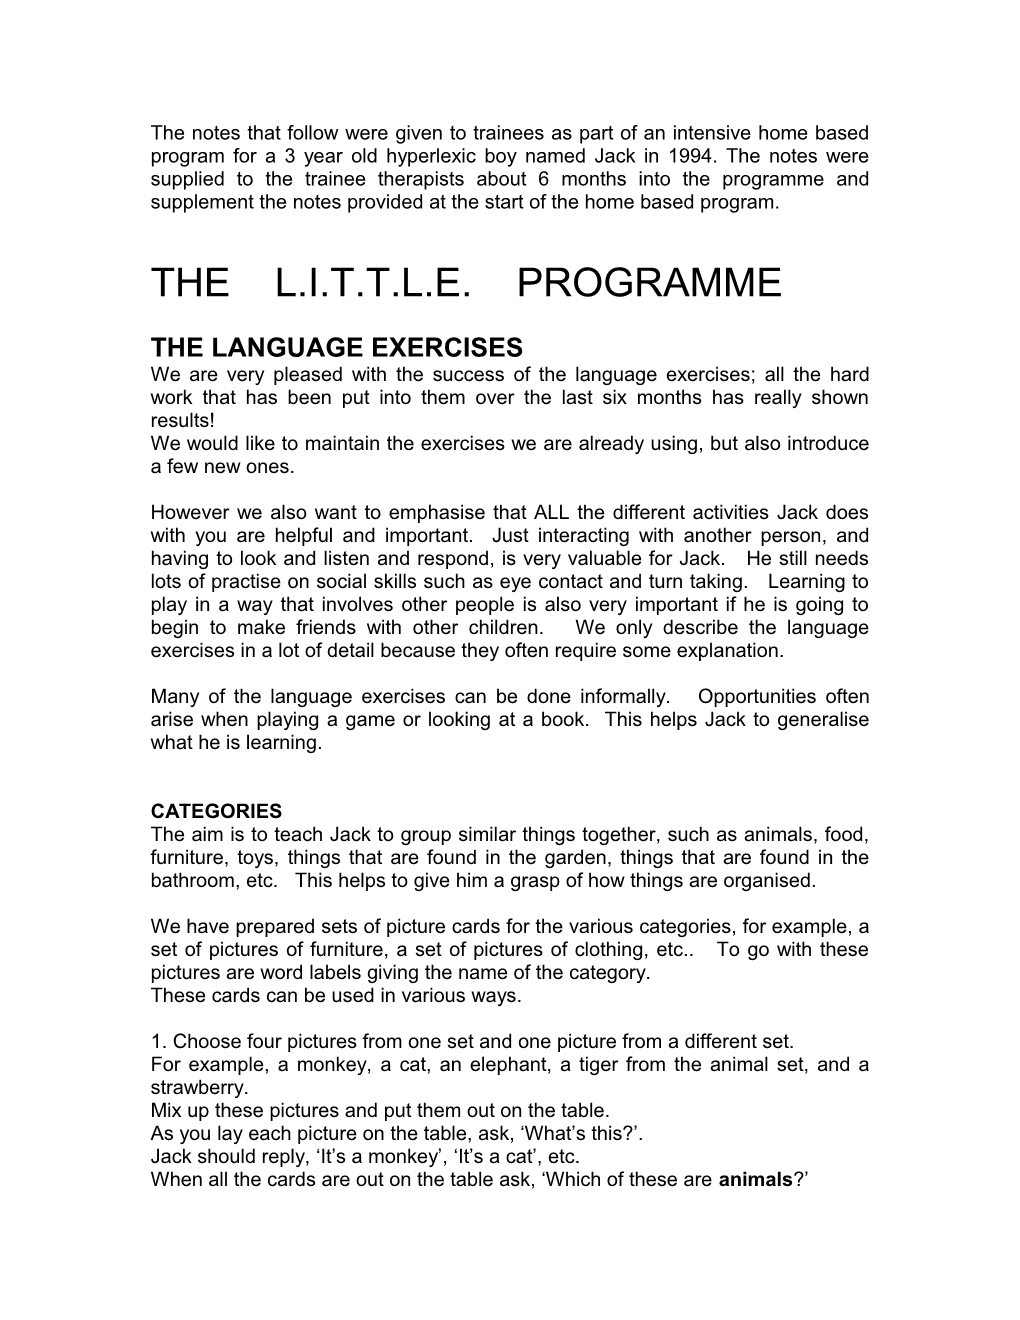 The Little Programme